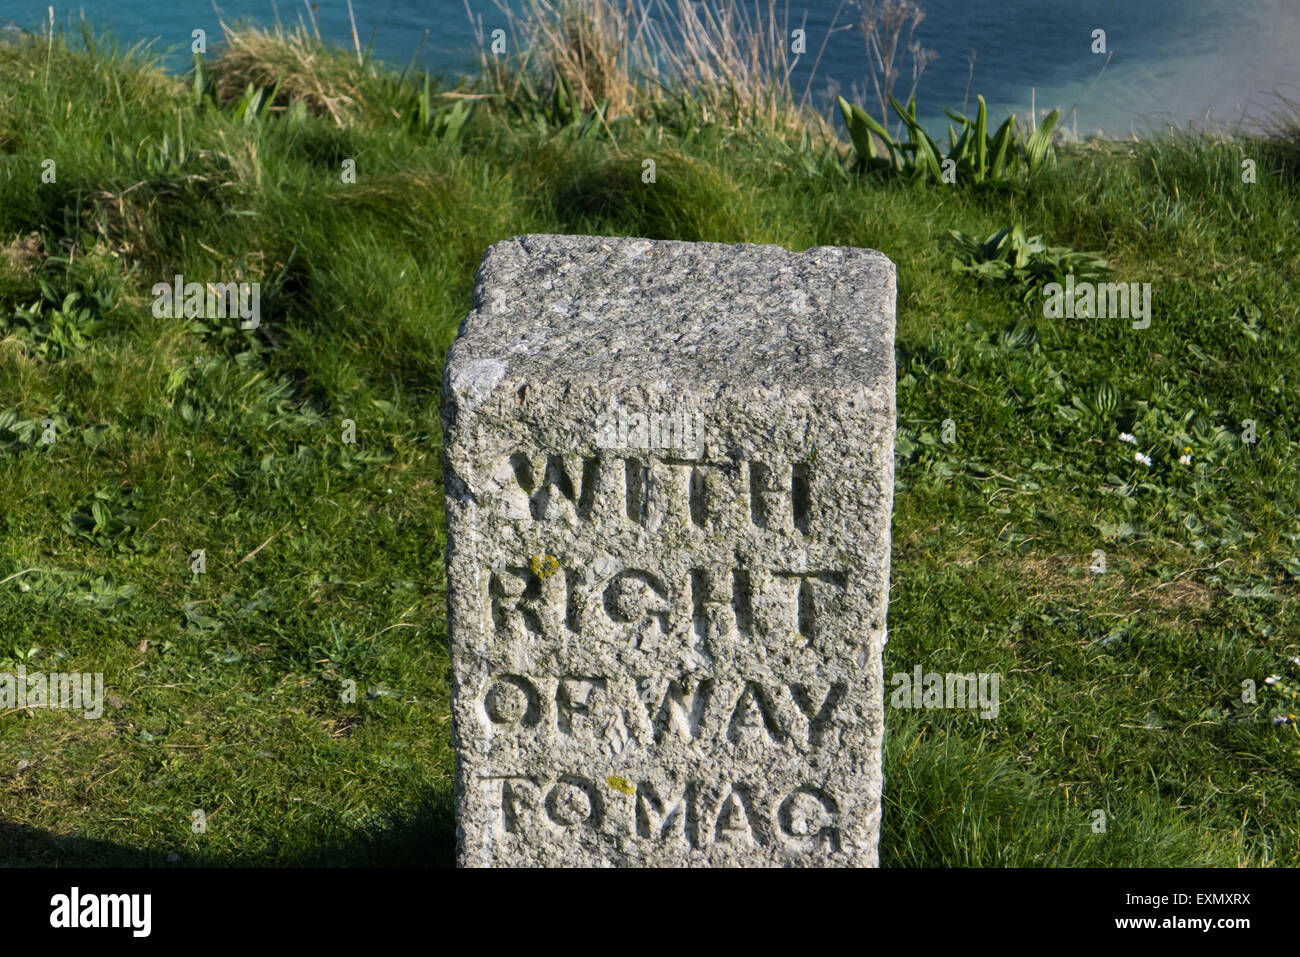 St. Ives, Cornwall, England. Rechts des Weges Steinmarke. Stockfoto